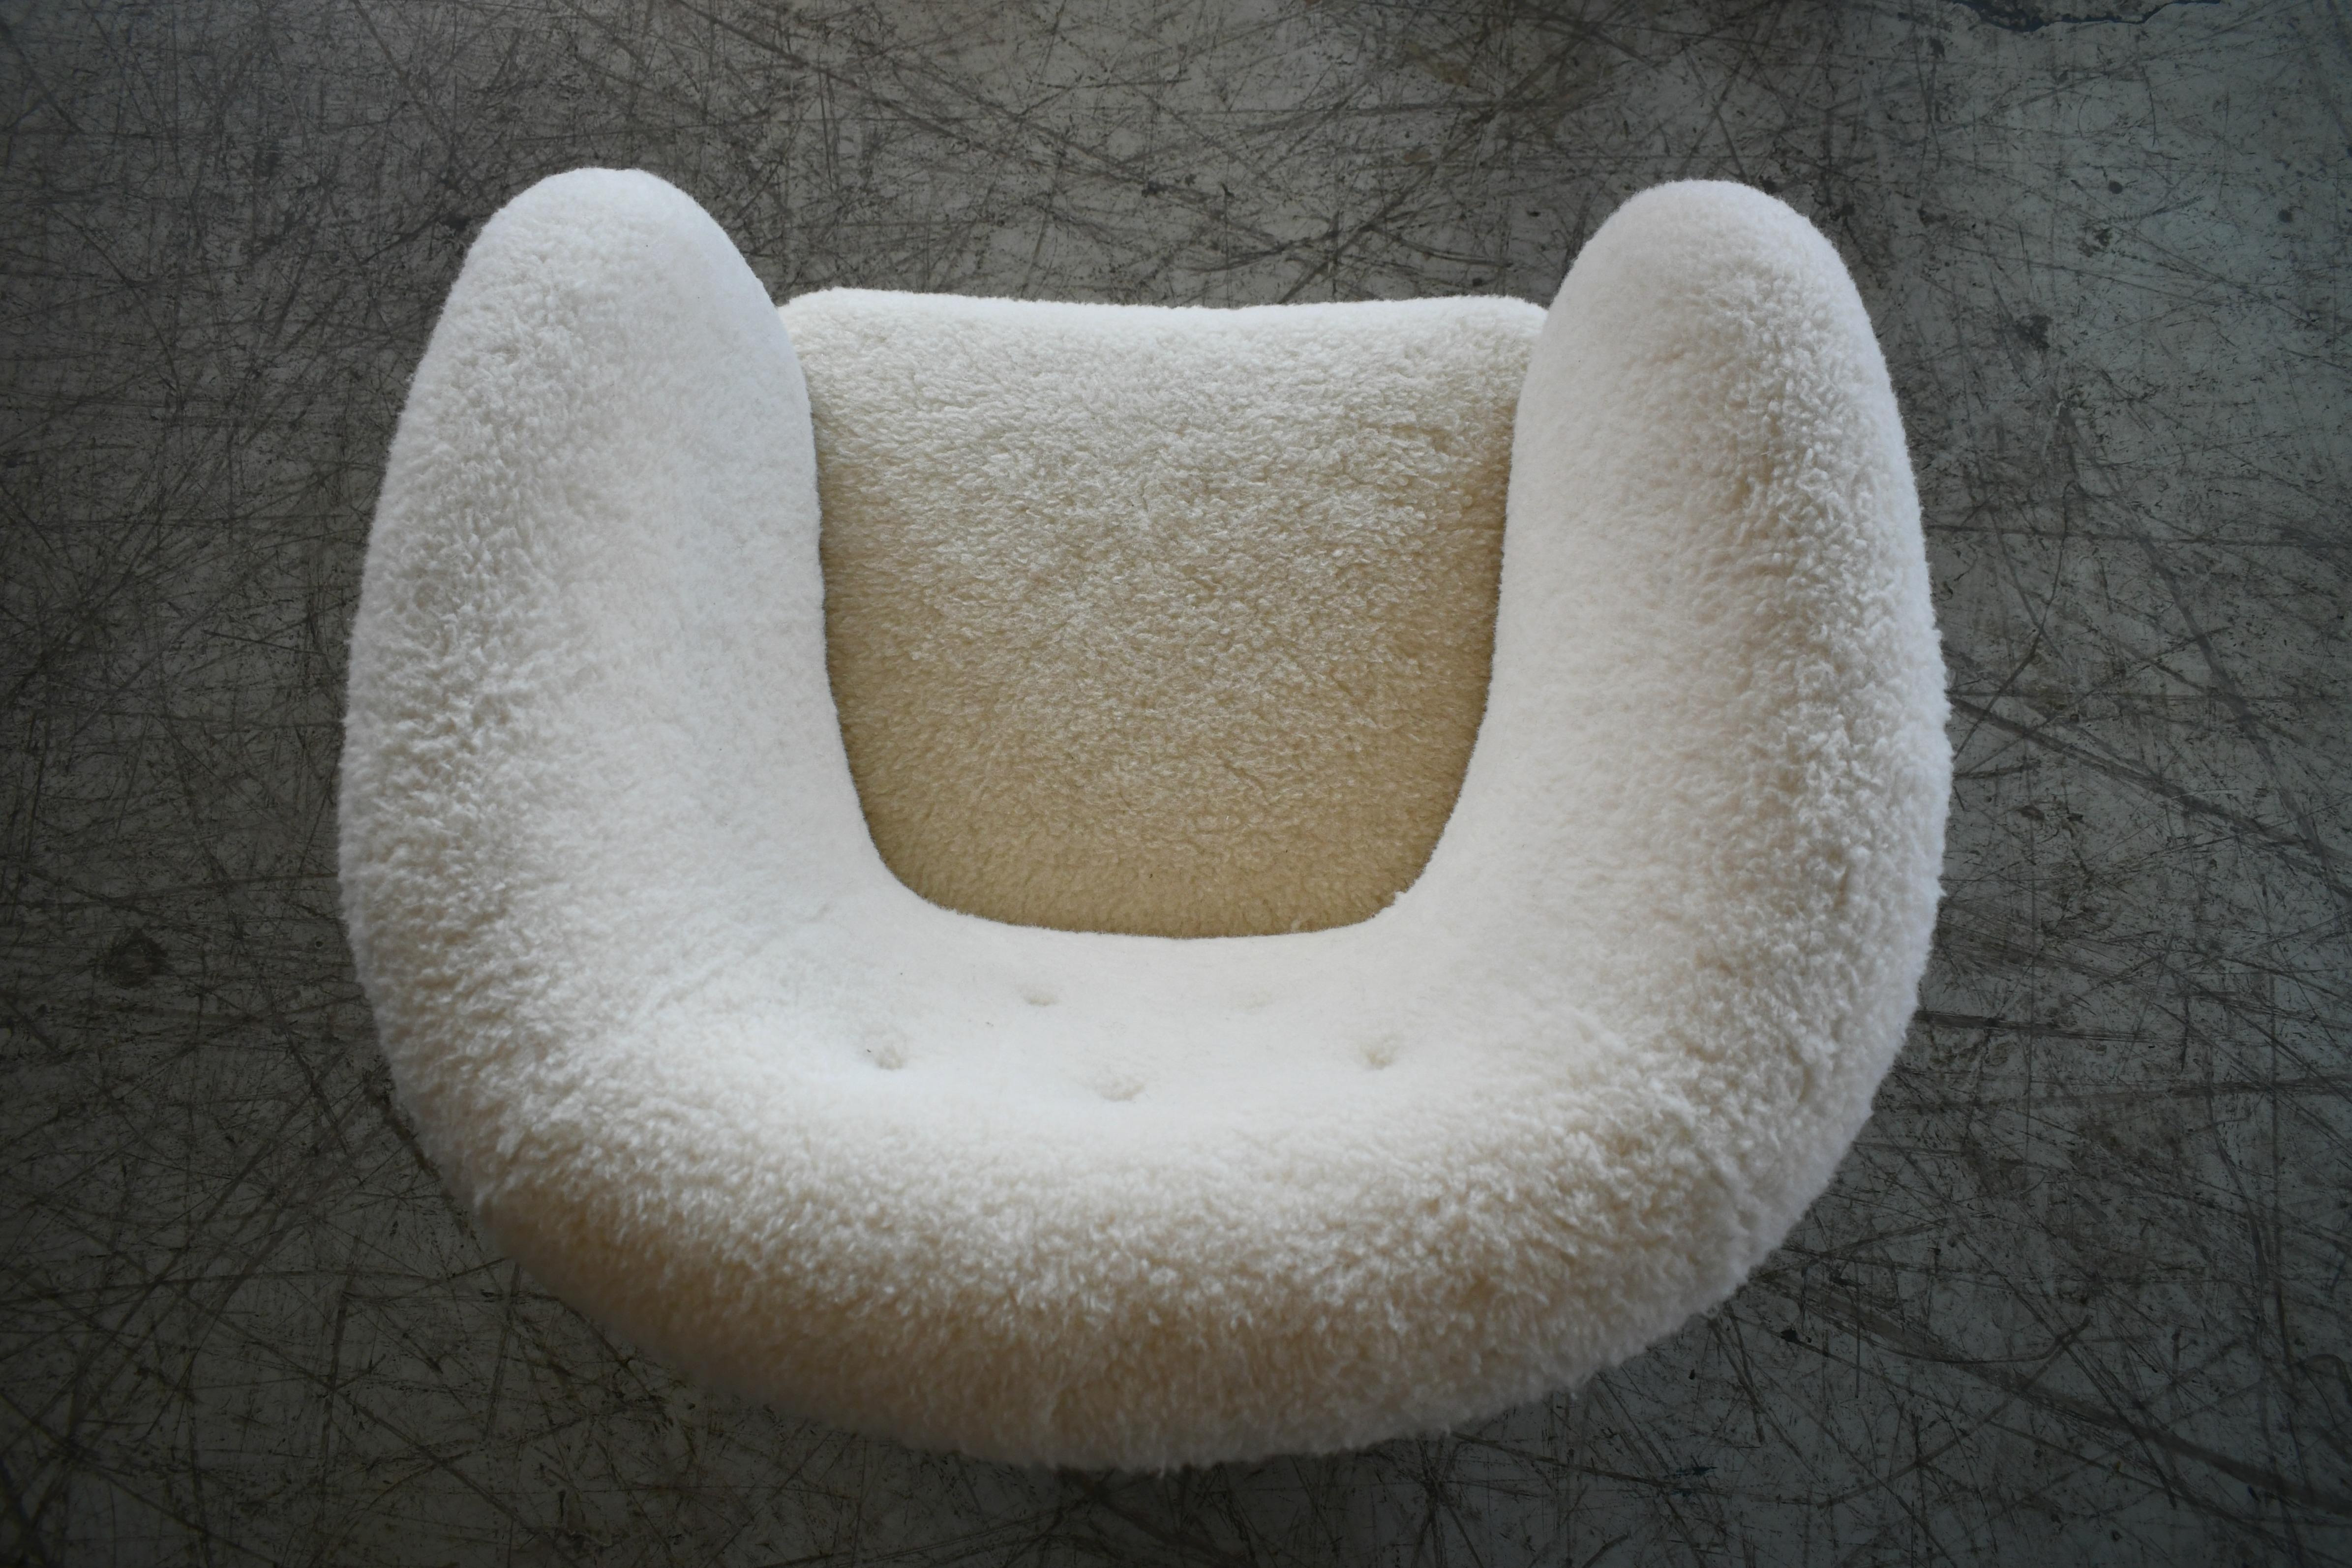 Scandinavian Modern Danish 1940s Viggo Boesen Style Lounge Chair in Lambswool by Slagelse Mobelvaerk